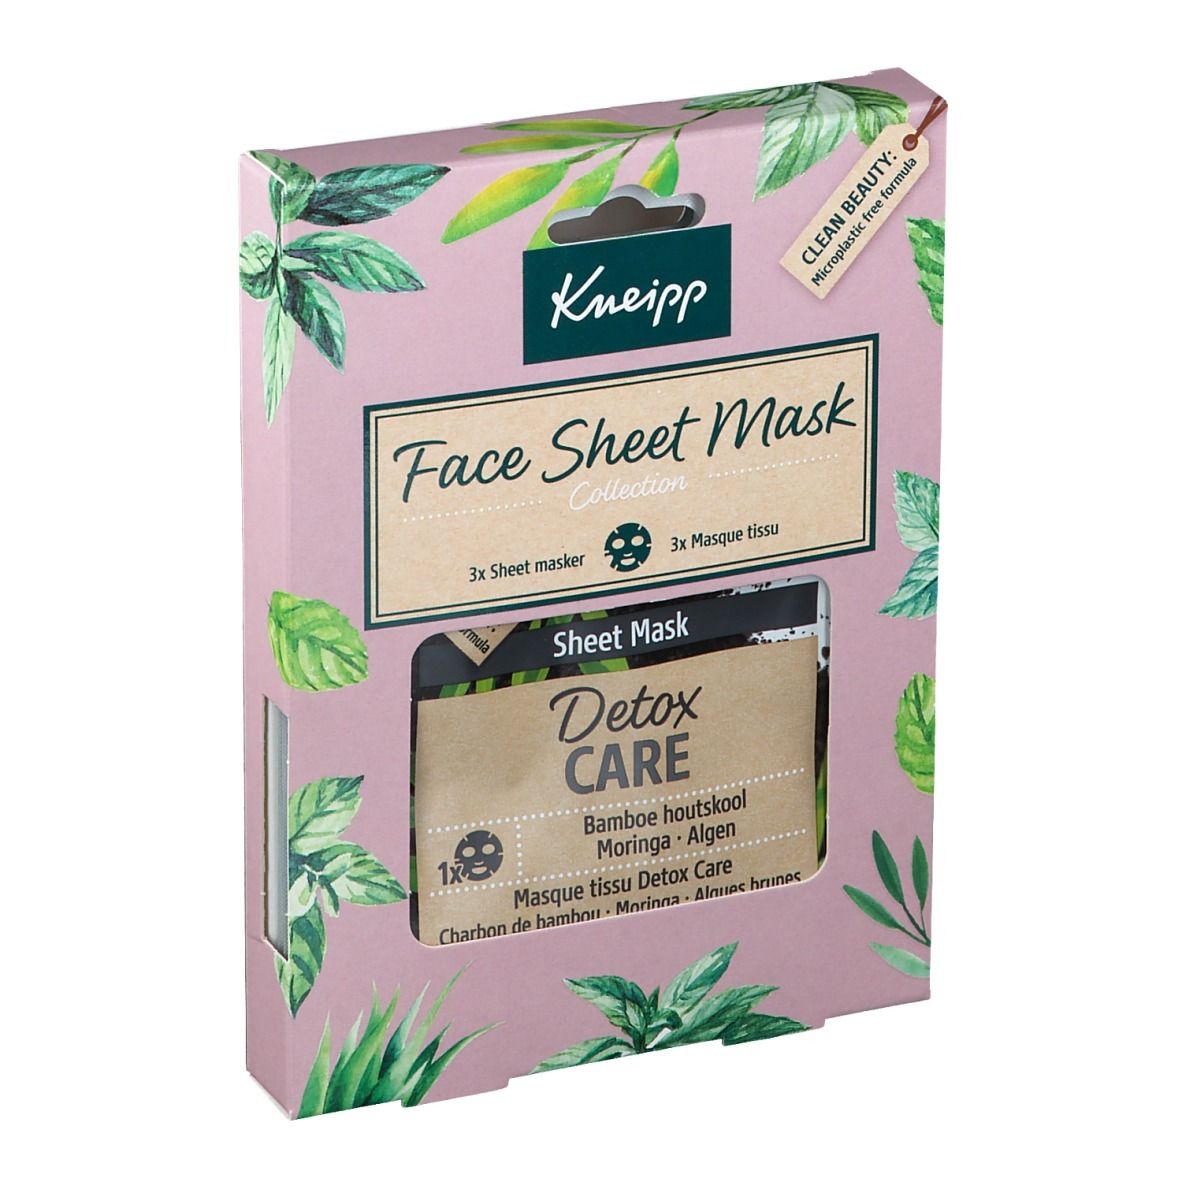 Kneipp Sheet Masques Gift Set